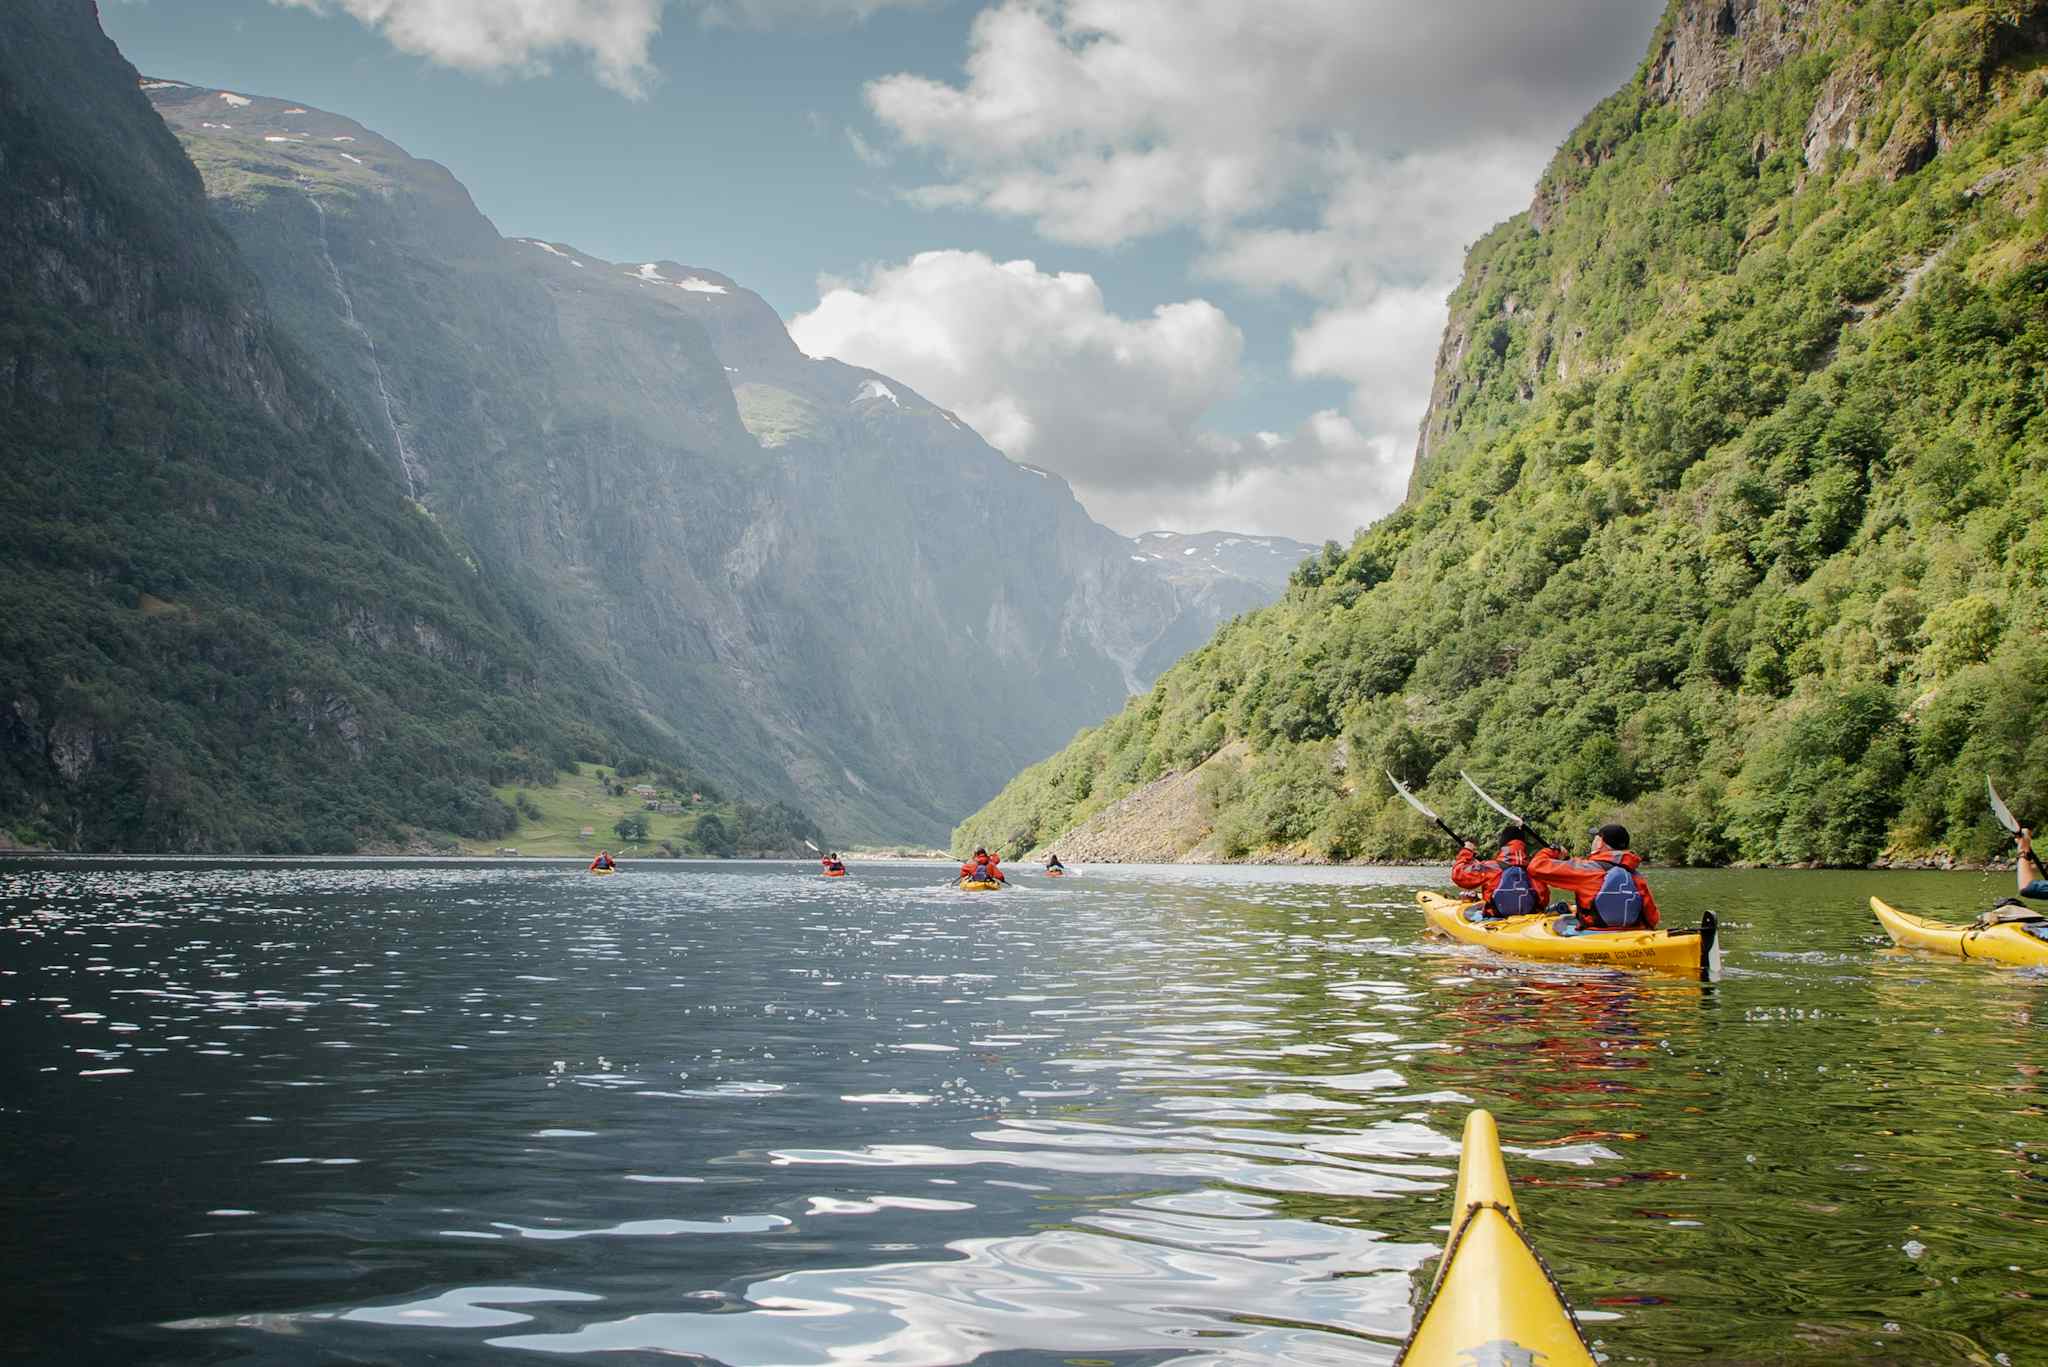 Kayakers paddling along the Nærøyfjord in Norway.